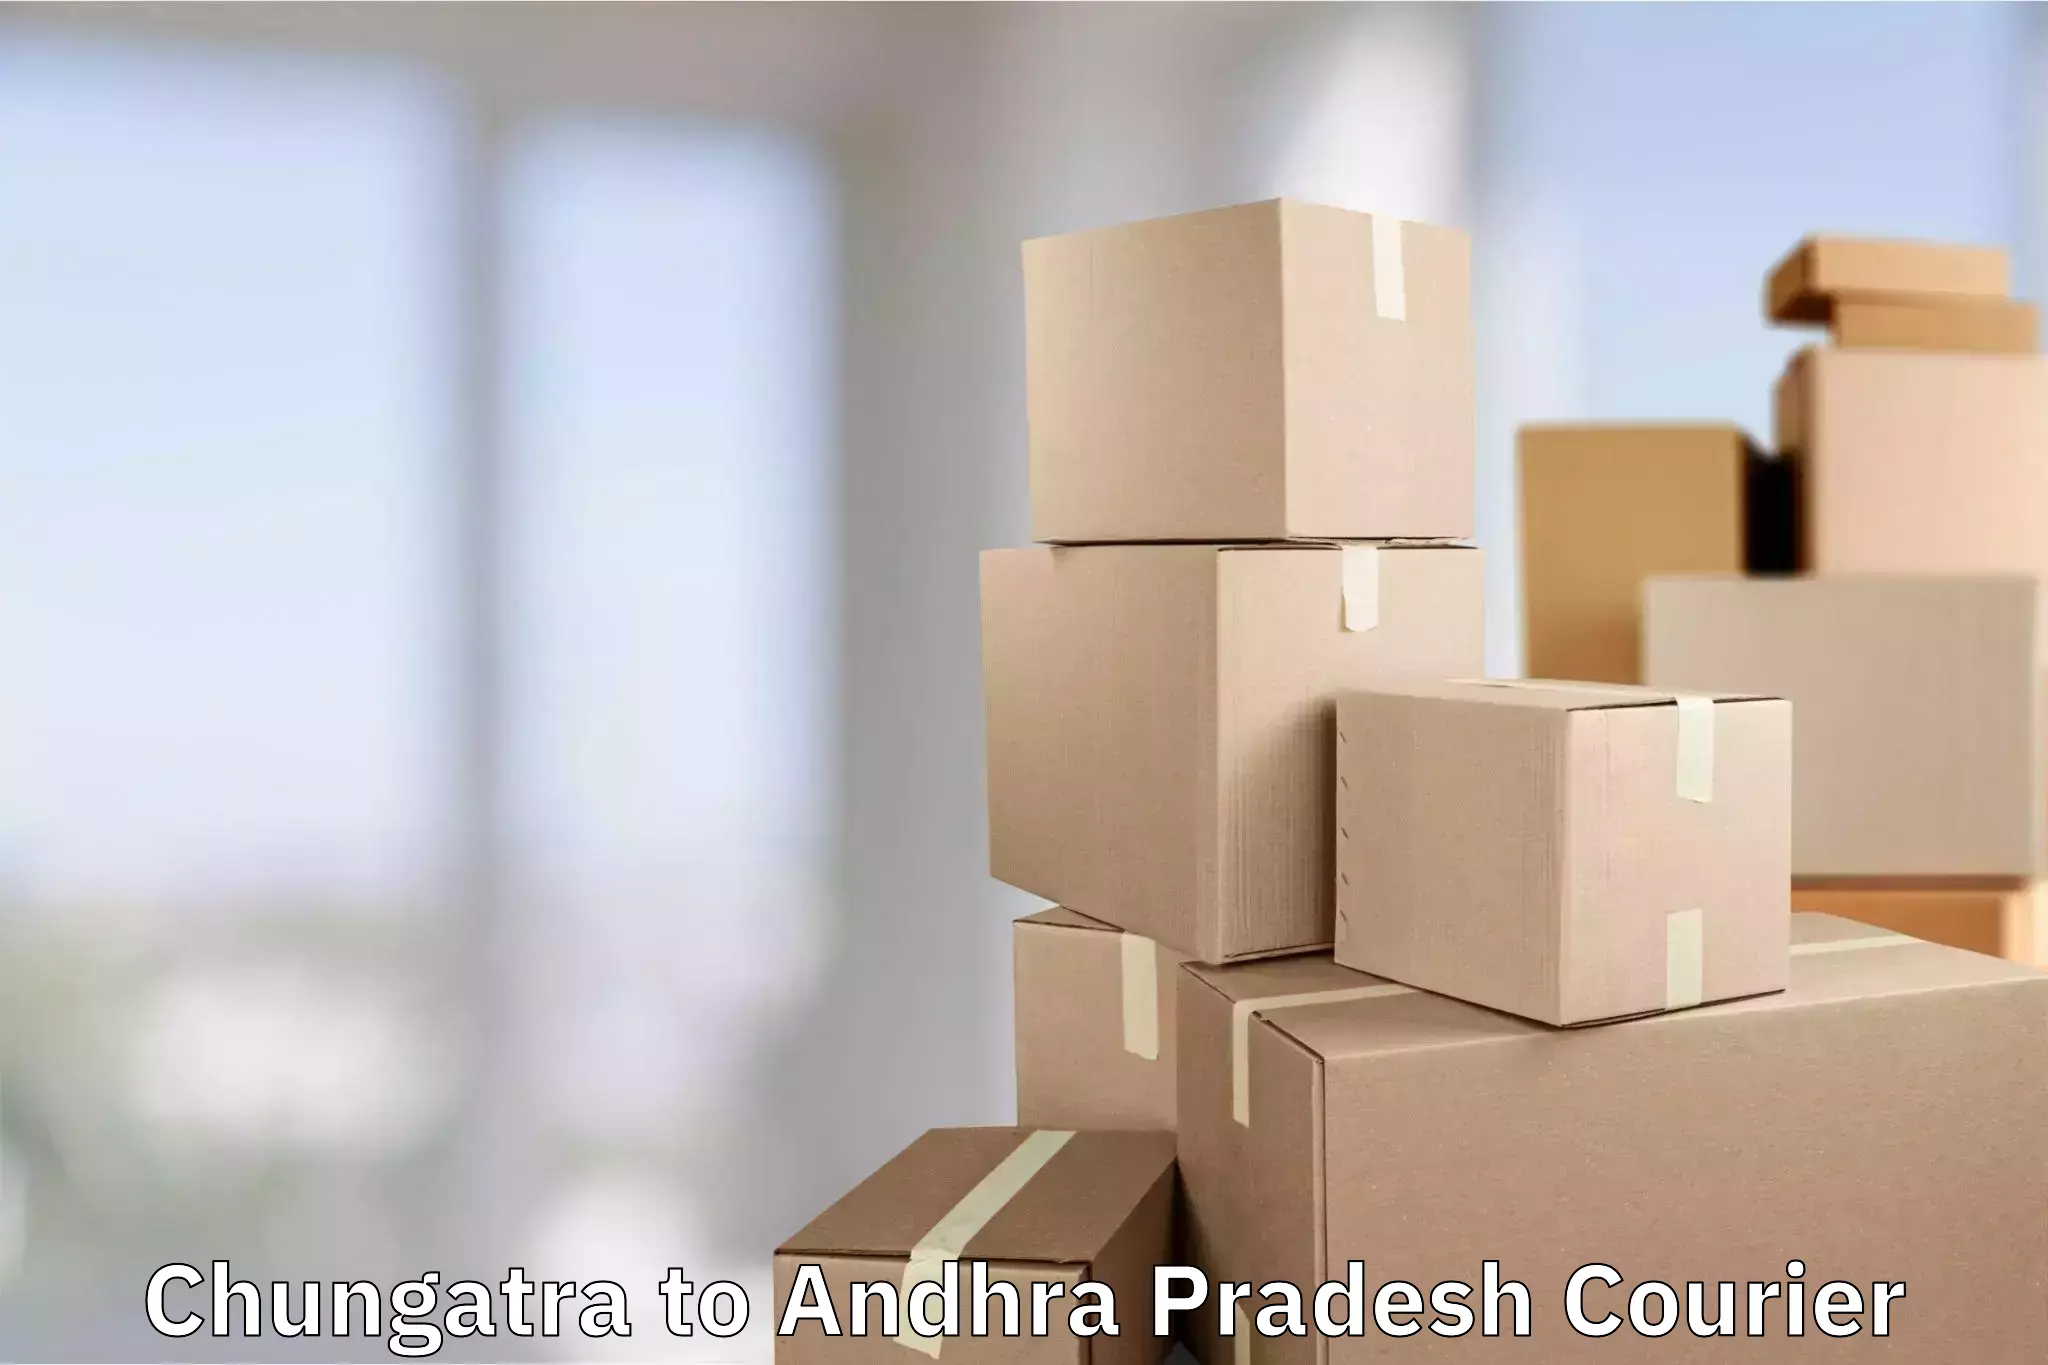 Luggage transport consultancy Chungatra to Andhra Pradesh